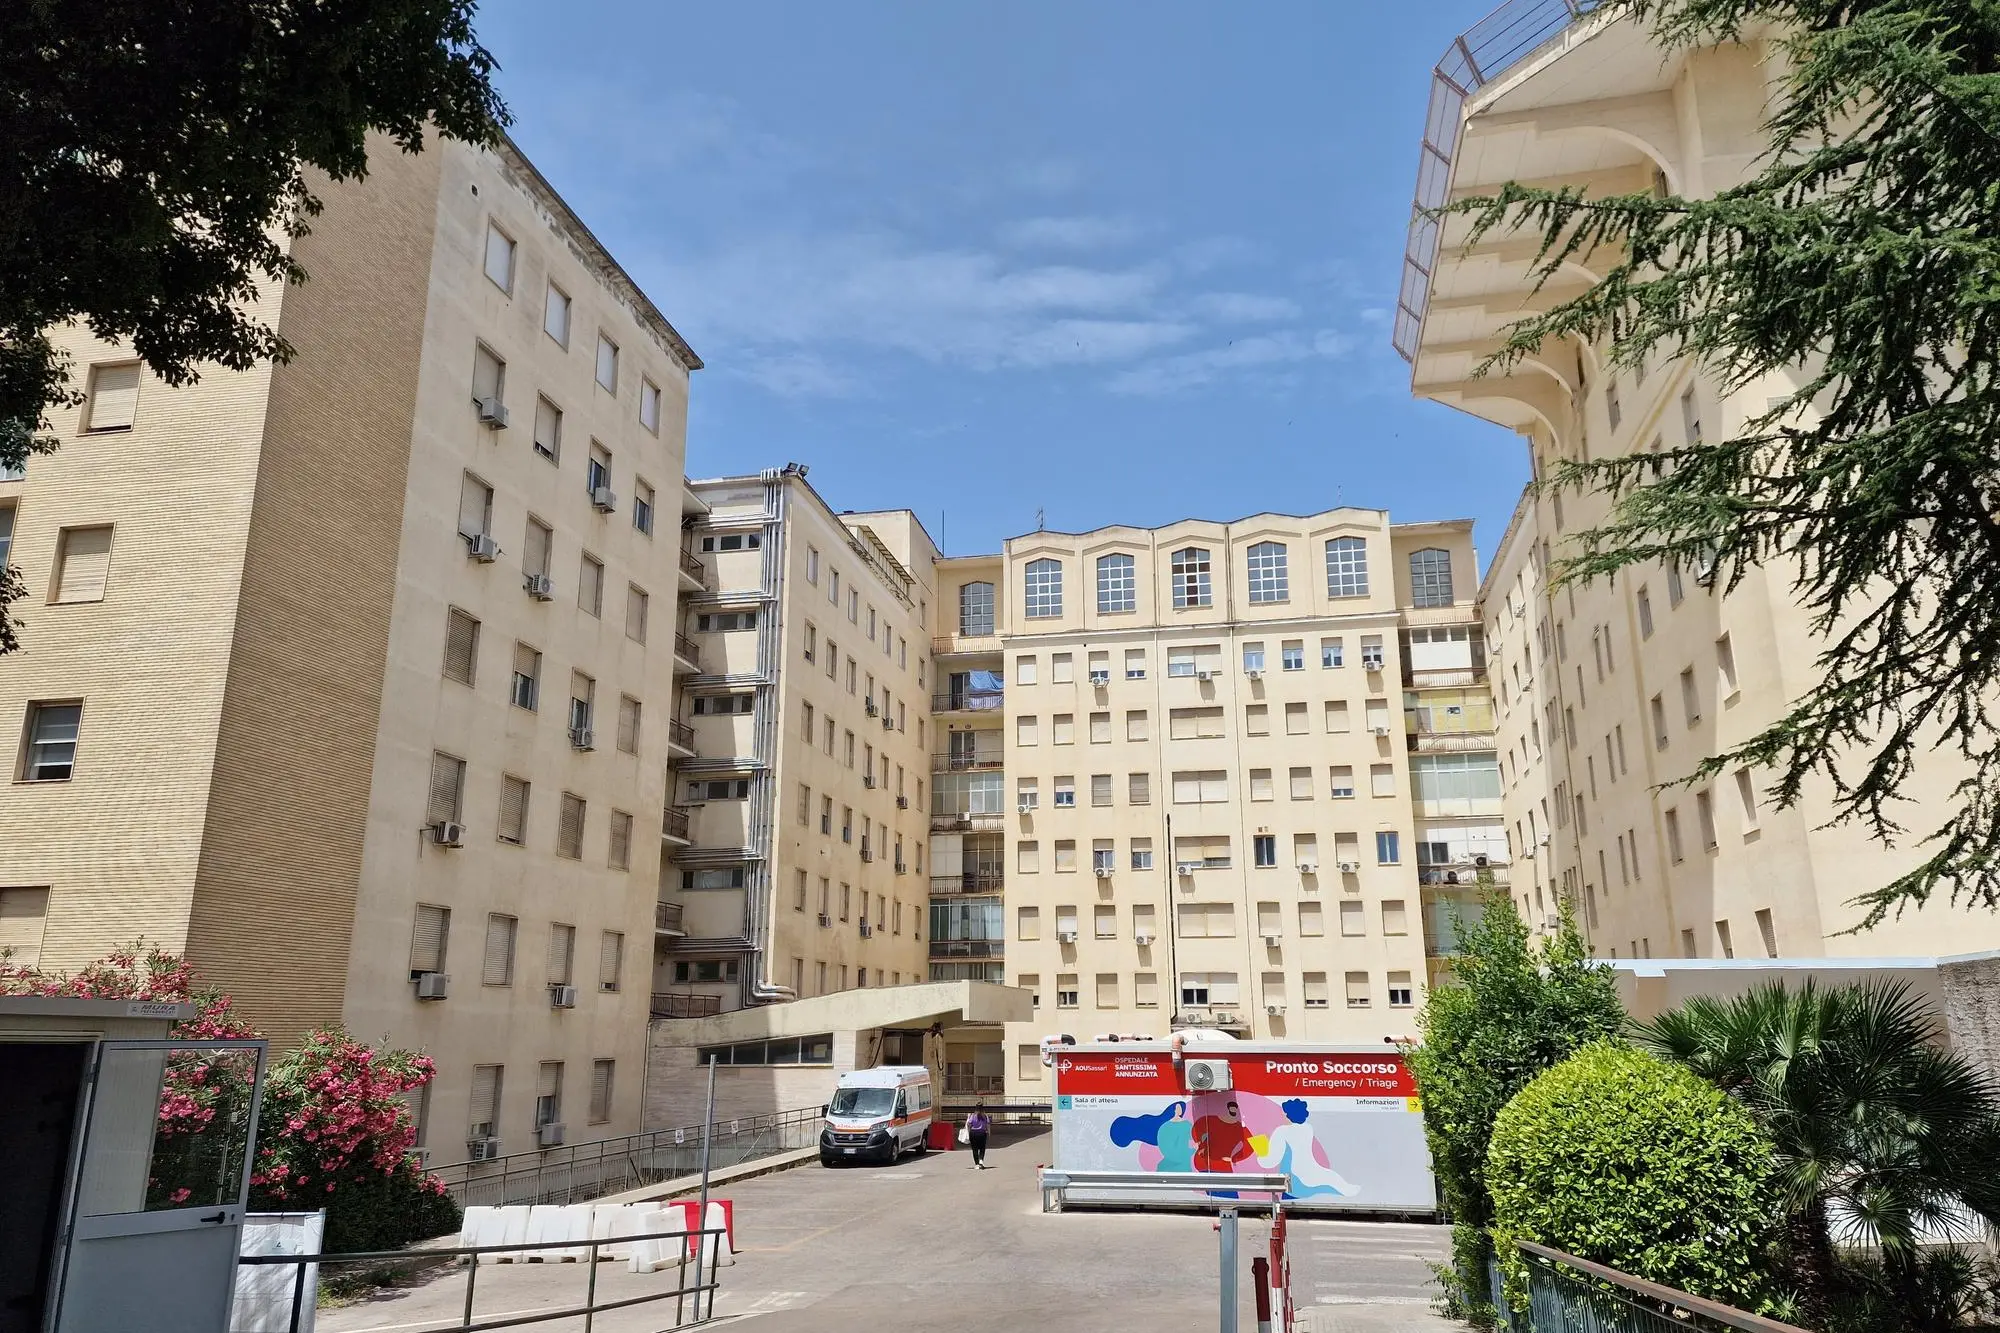 L'ospedale Civile di Sassari (Foto: Floris)